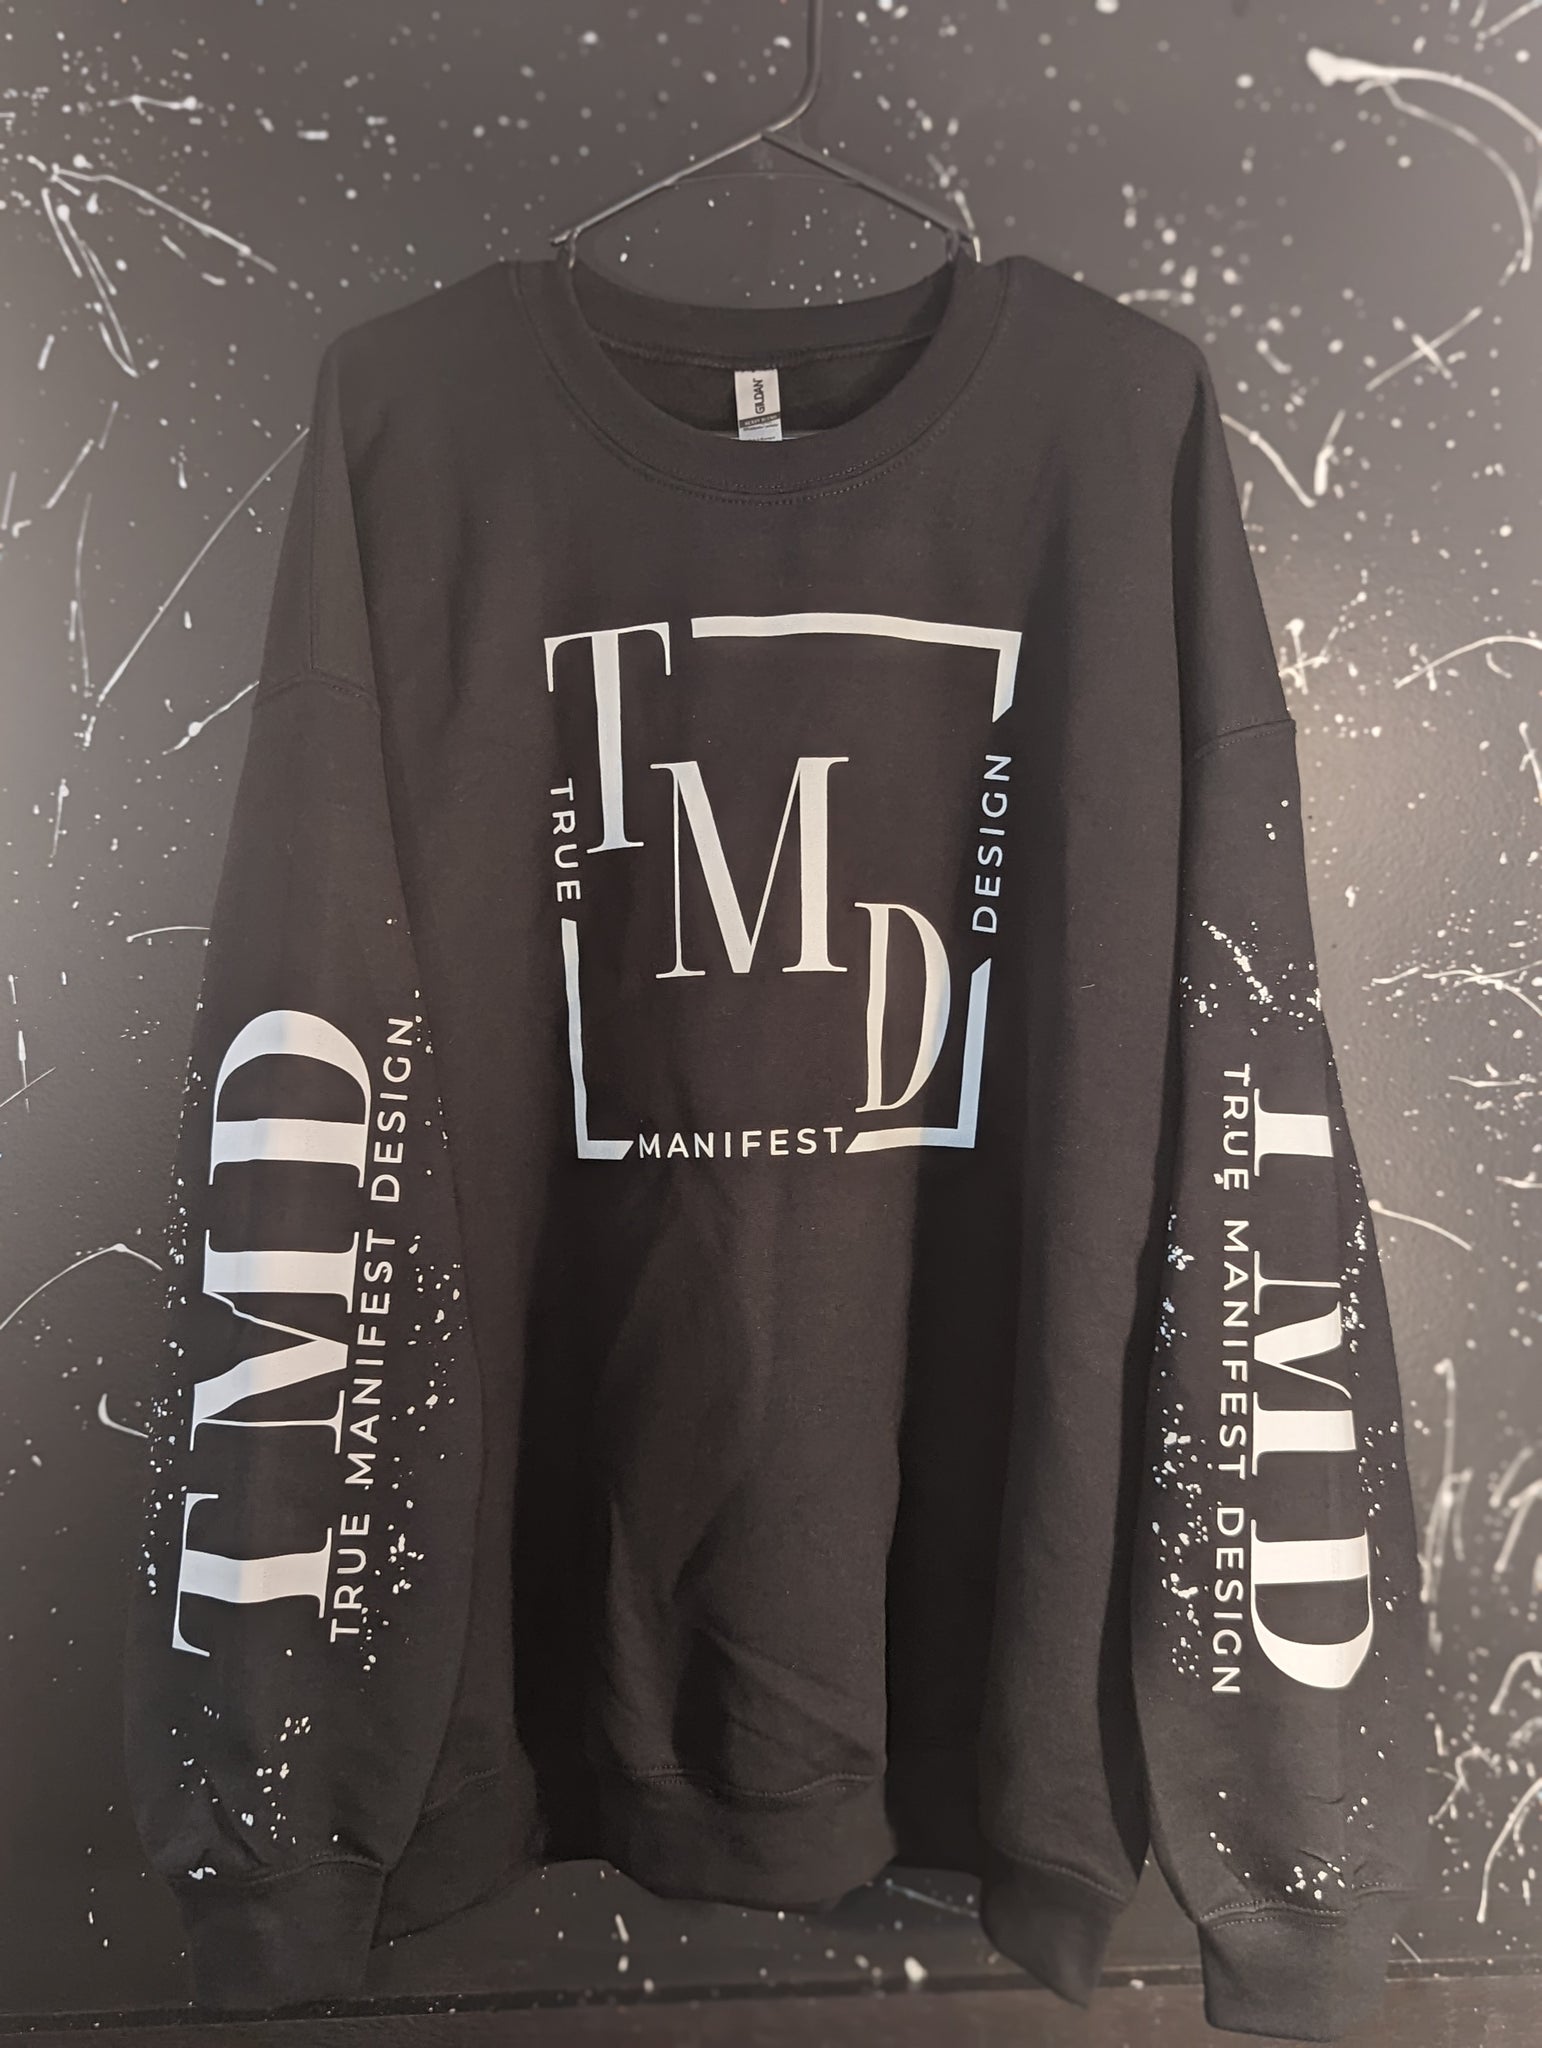 Tシャツ TMD GENUINE Design Tシャツ - トップス